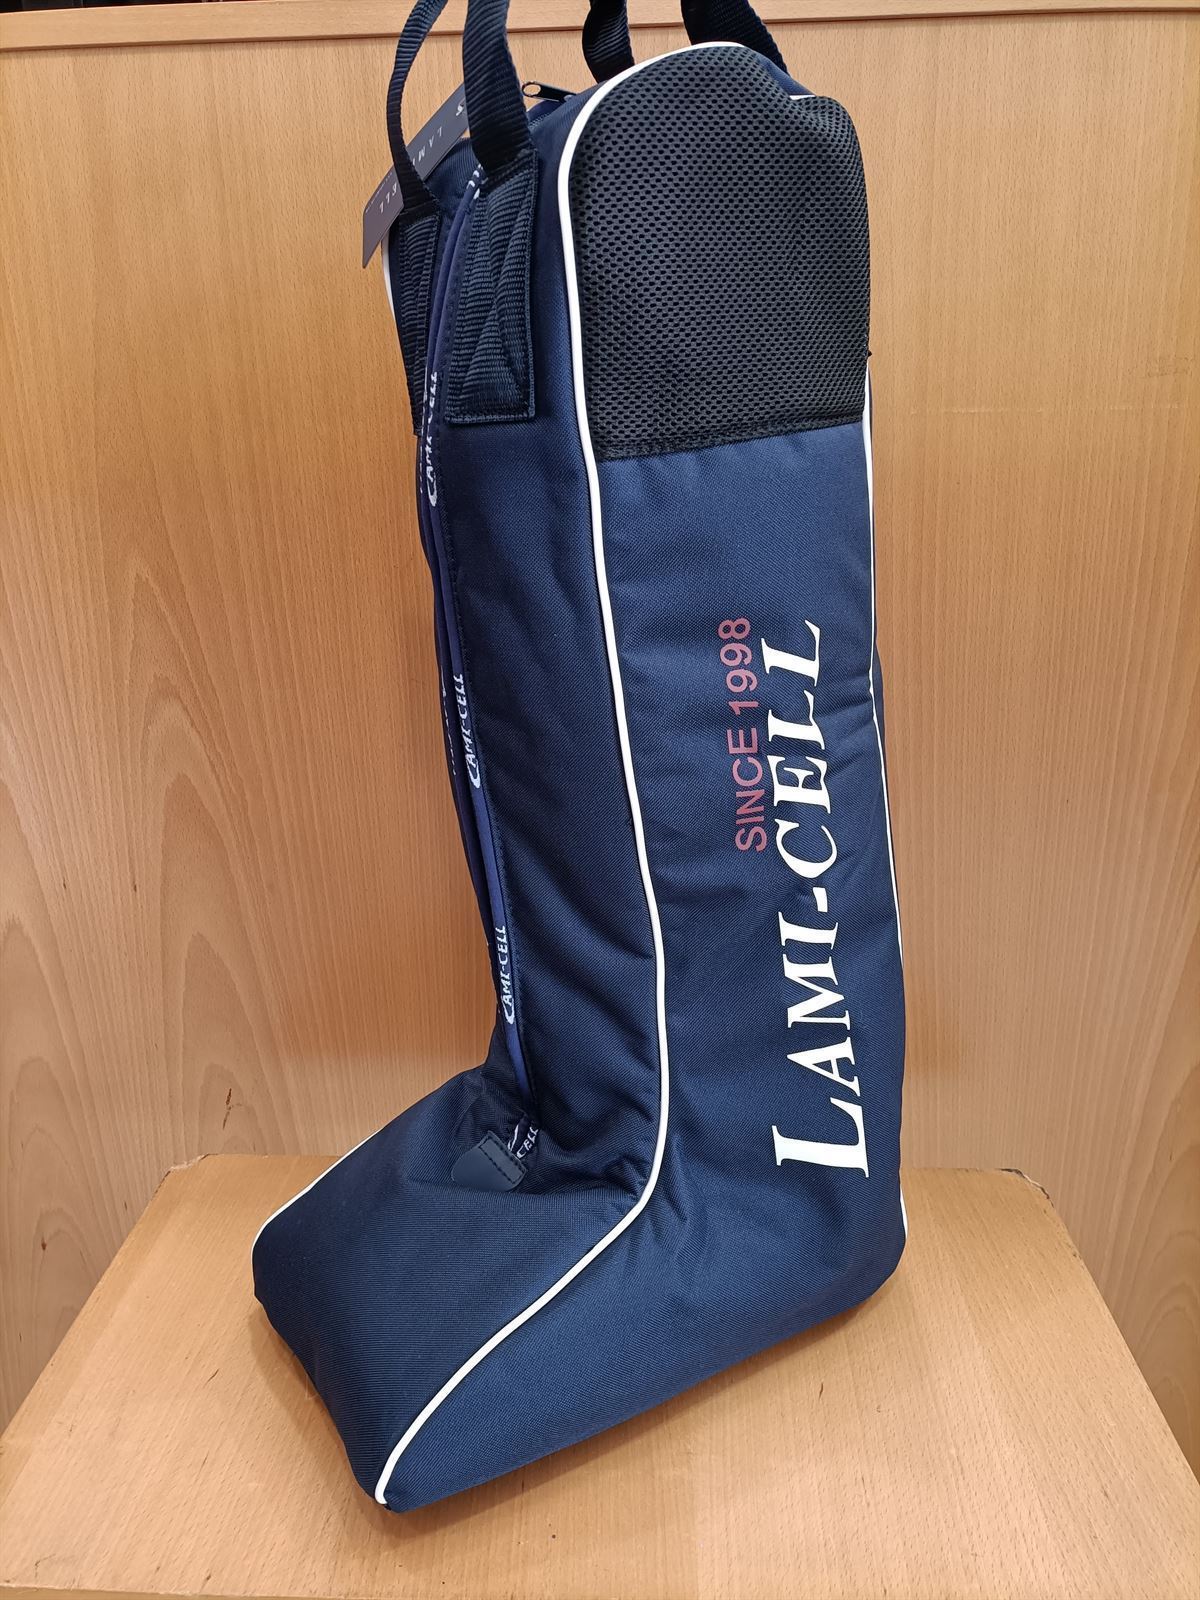 Bolsa para botas LAMI-CELL Jaguar, color azul marino - Imagen 2